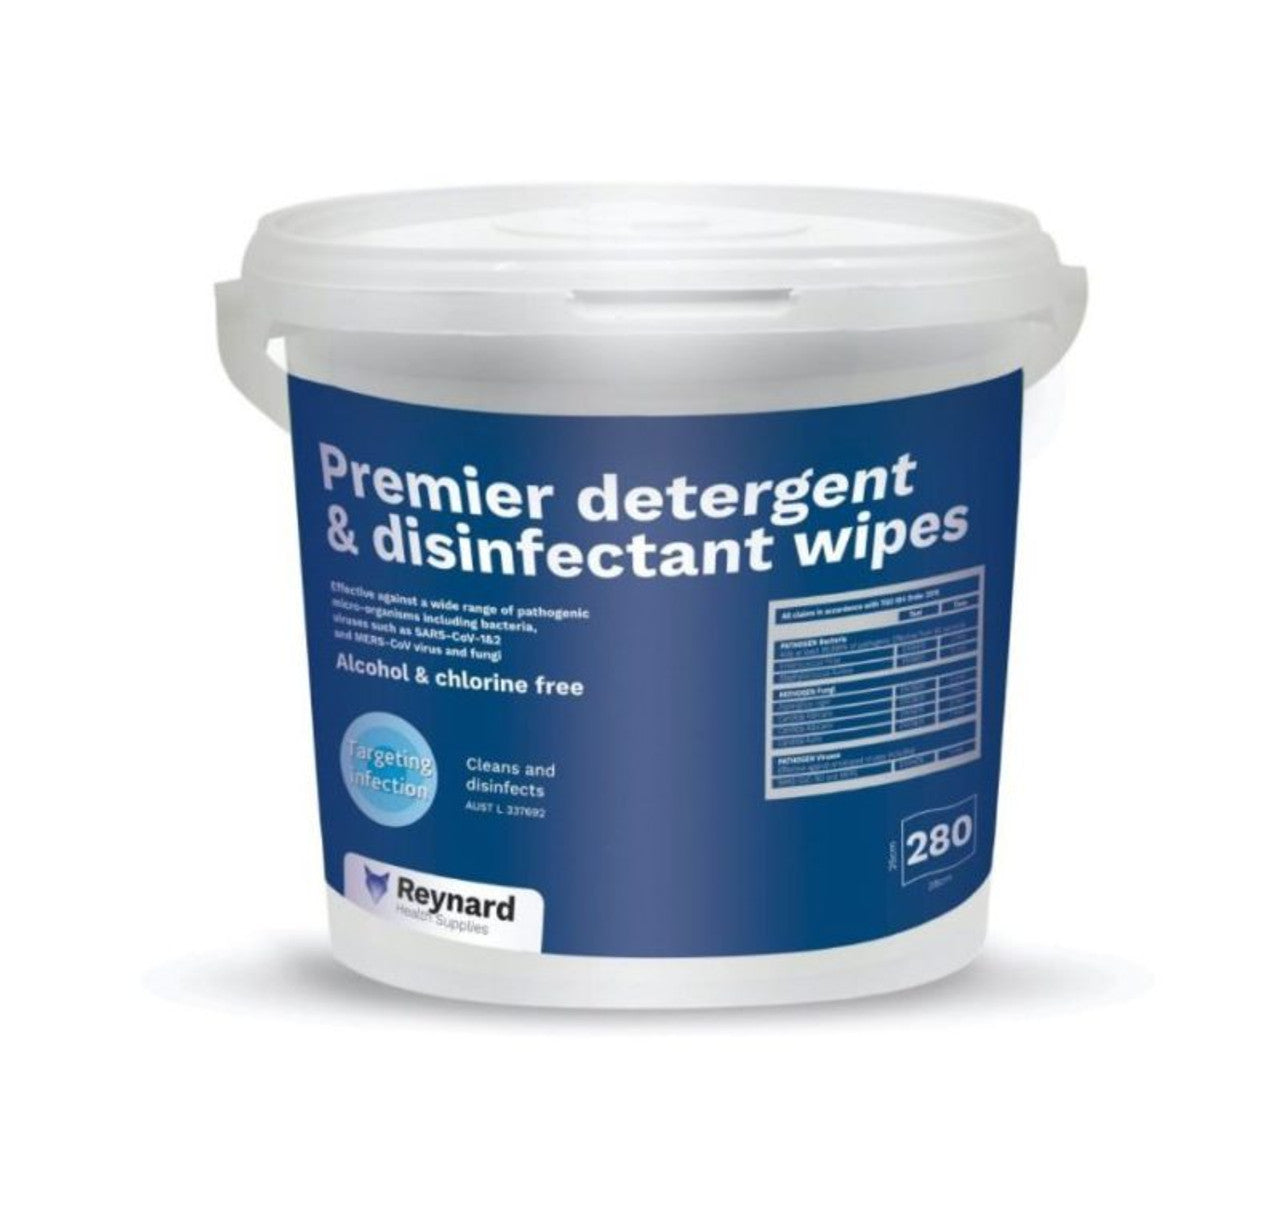 Reynard Premier Detergent & Disinfectant Wipes - 280wipes Tub